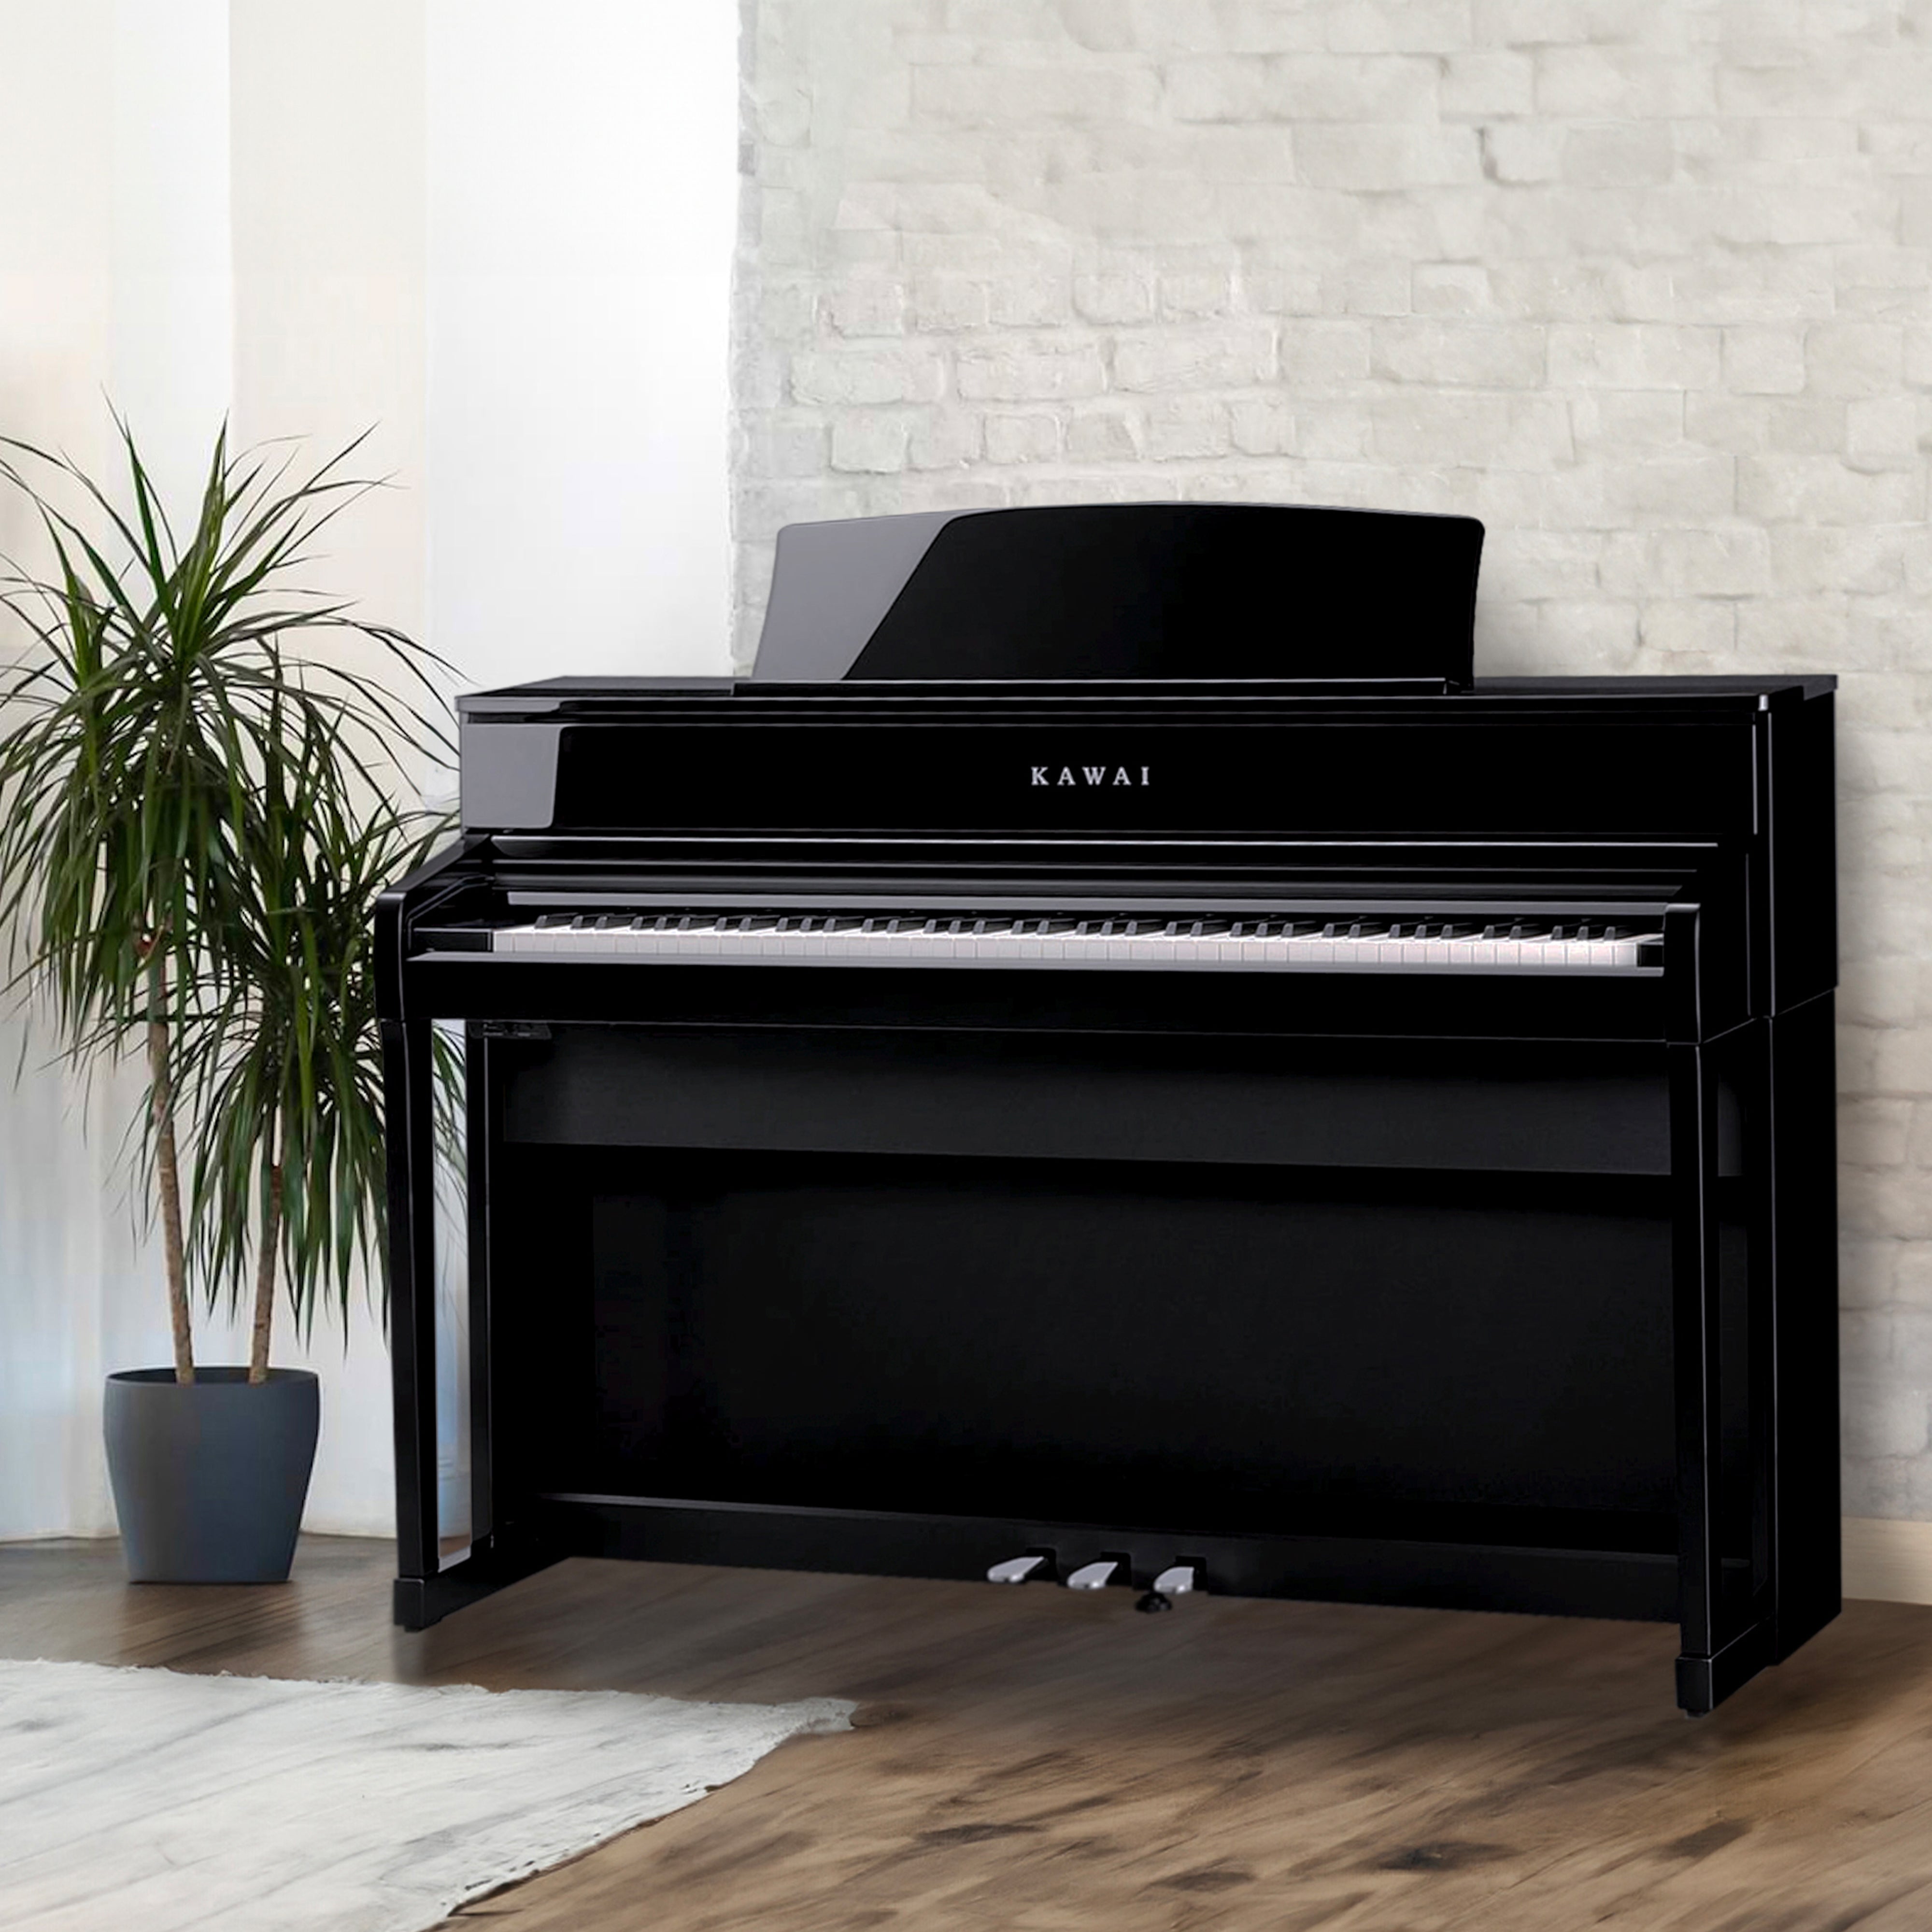 Kawai CA701 Digital Piano - Ebony Polish - in a stylish living space